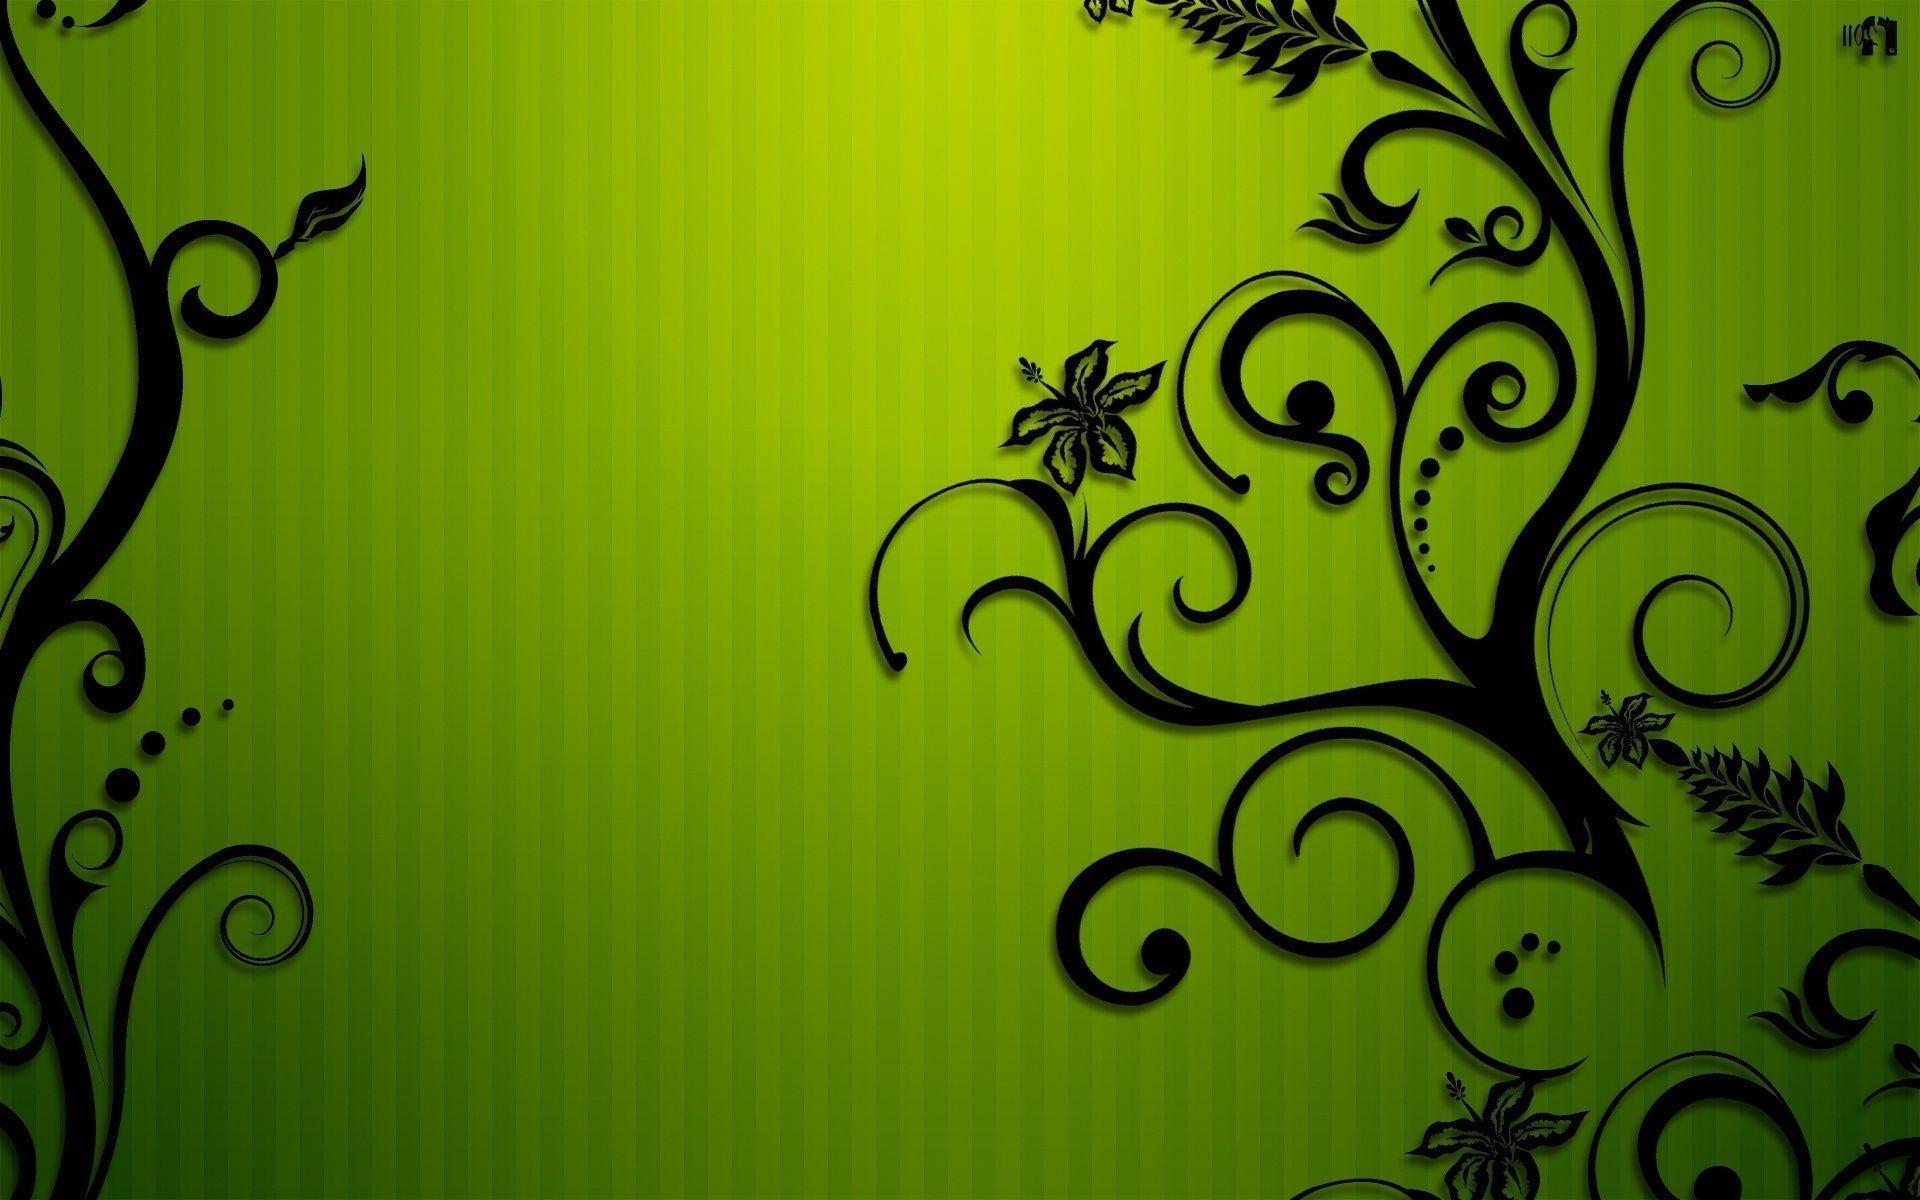 Green Background 94 193309 Image HD Wallpaper. Wallfoy.com